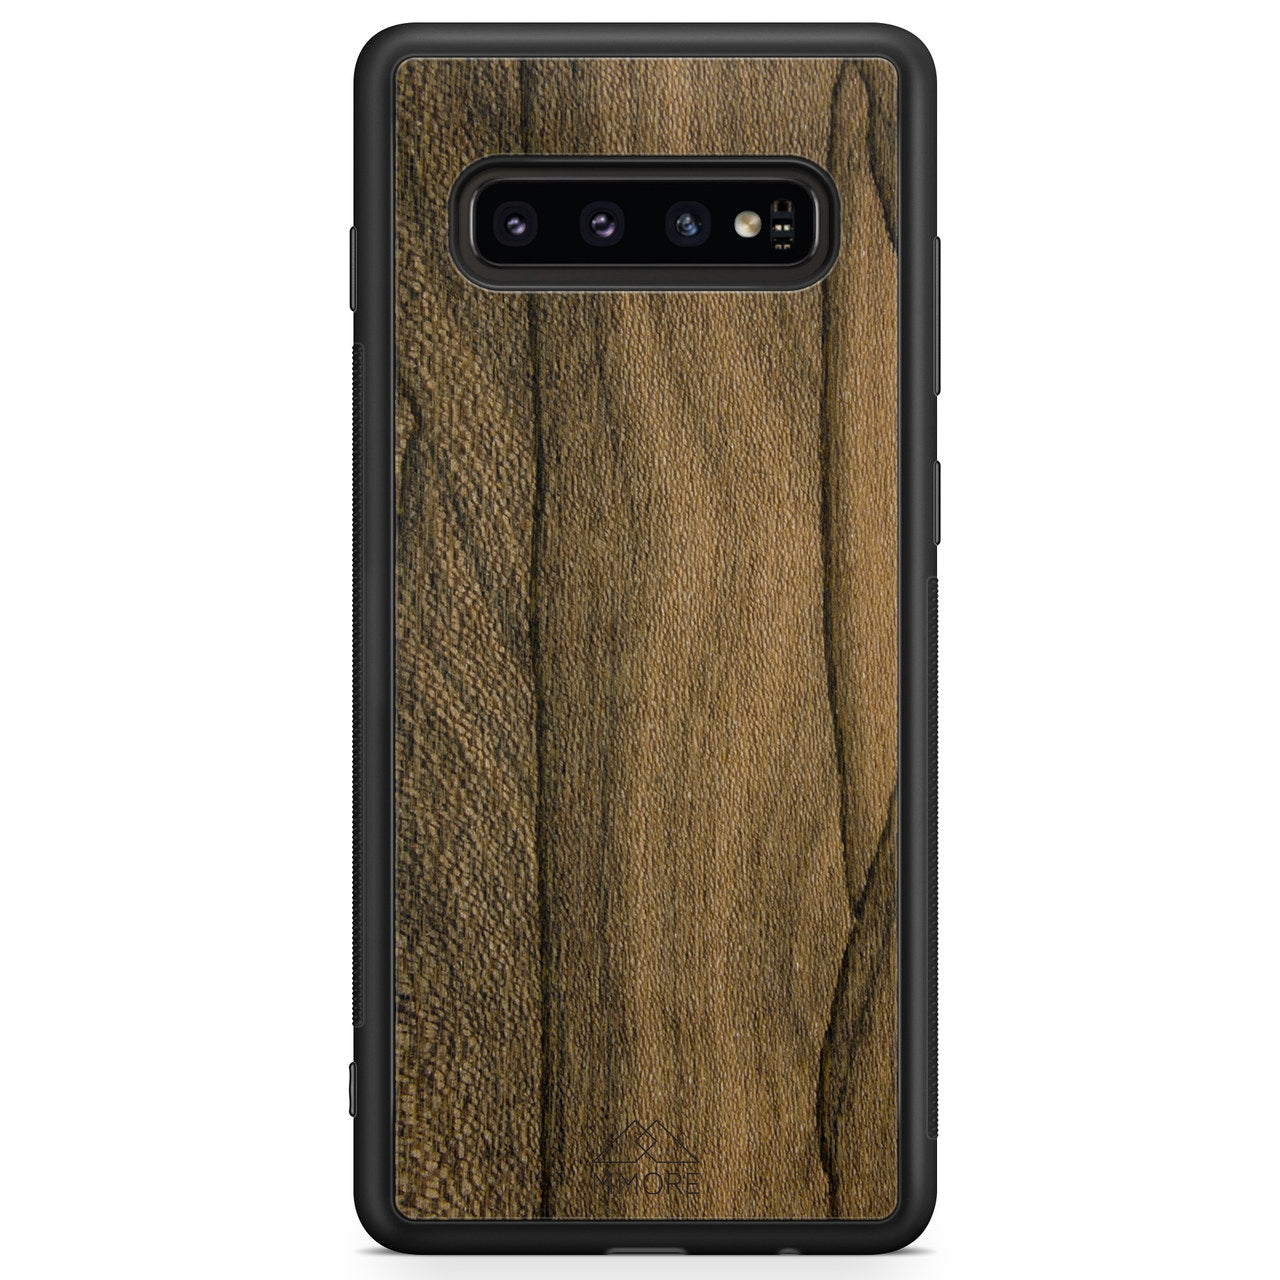 Caja del teléfono Samsung S10 de madera de ziricote